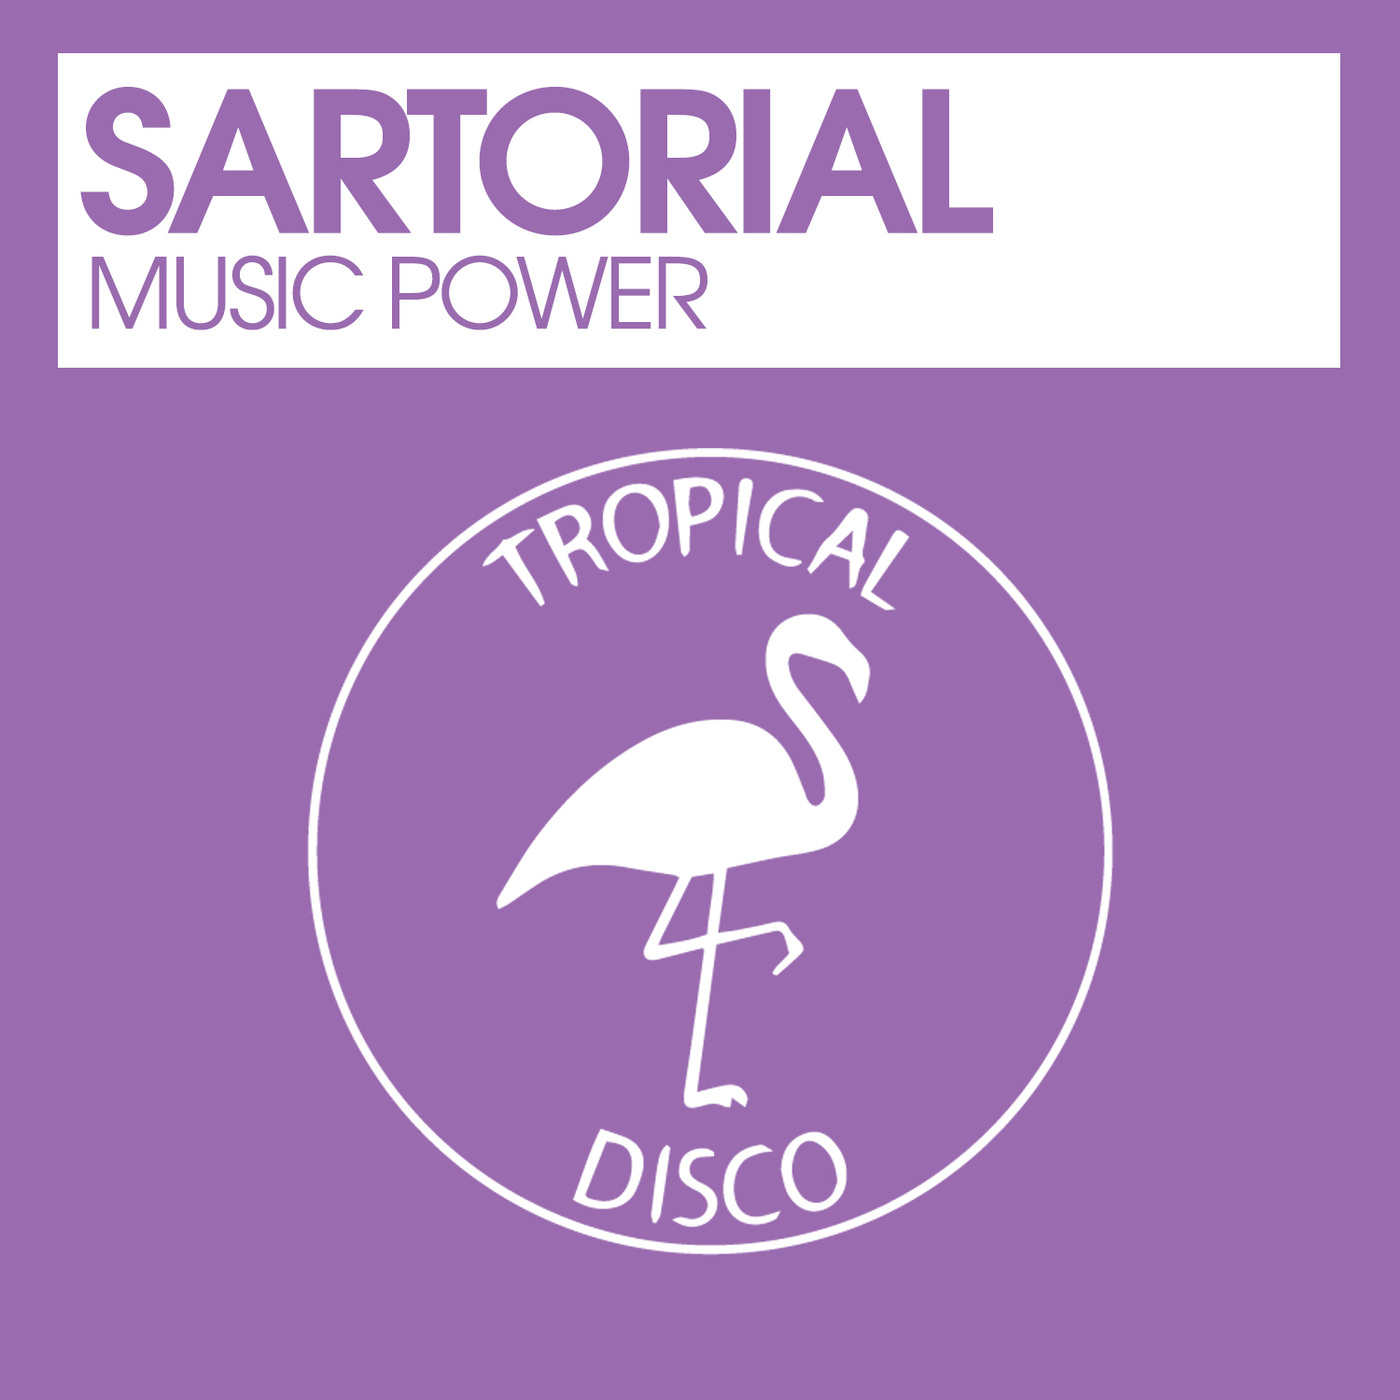 Sartorial - Music Power / Tropical Disco Records